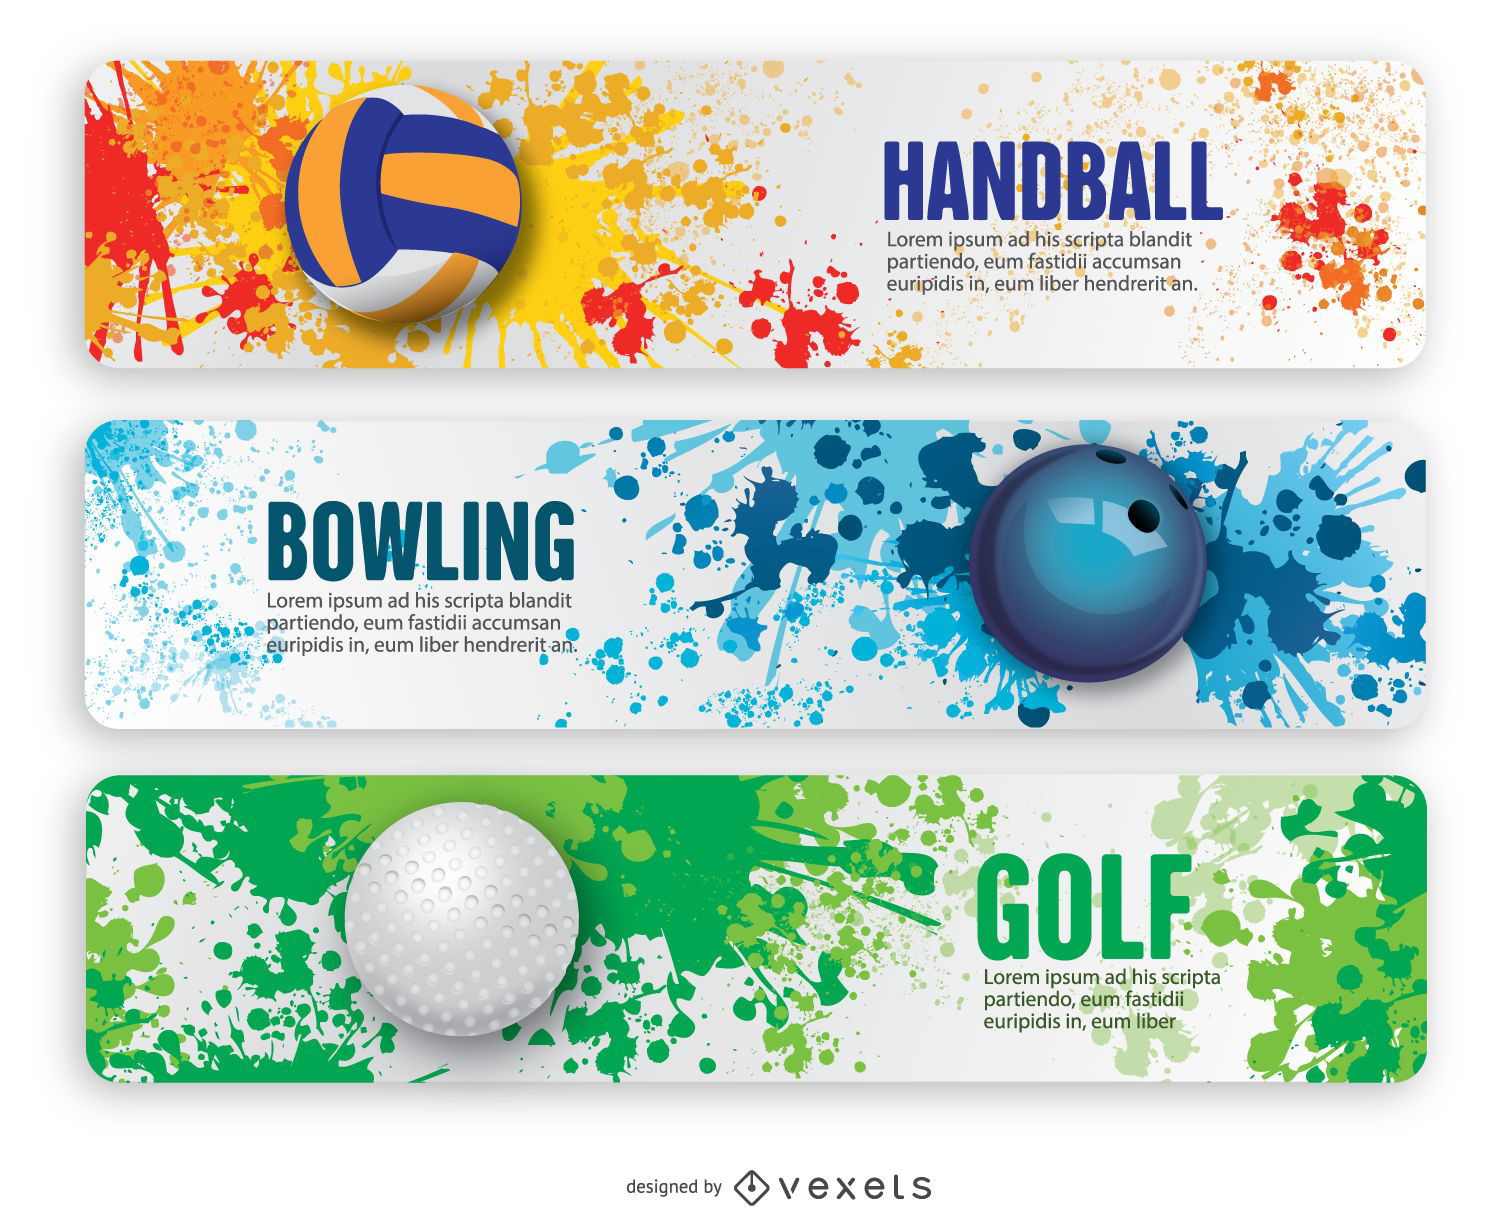 Handball- Bowling- und Golfbanner